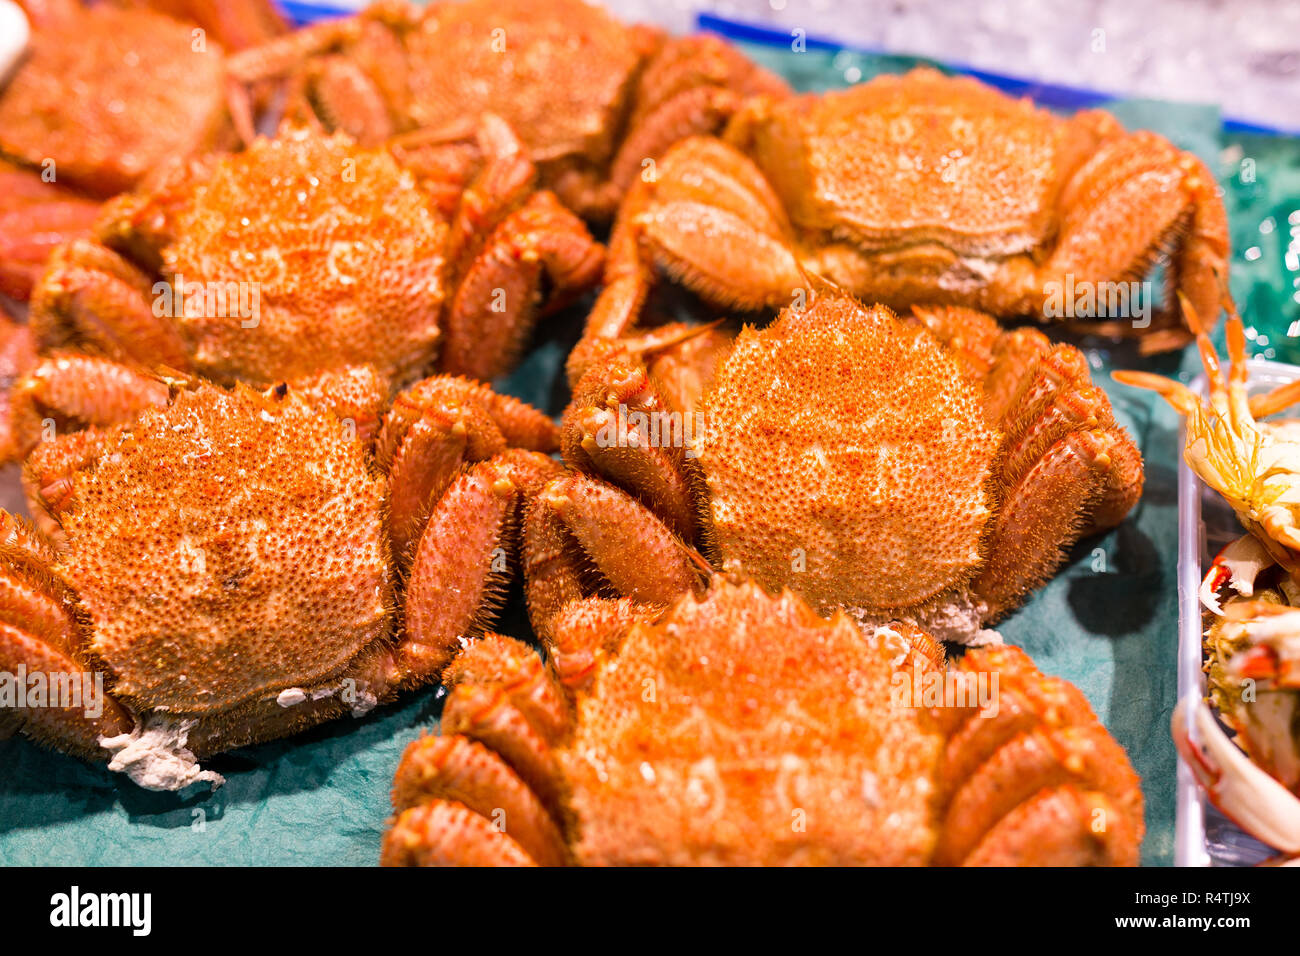 Crab in wet market Stock Photo